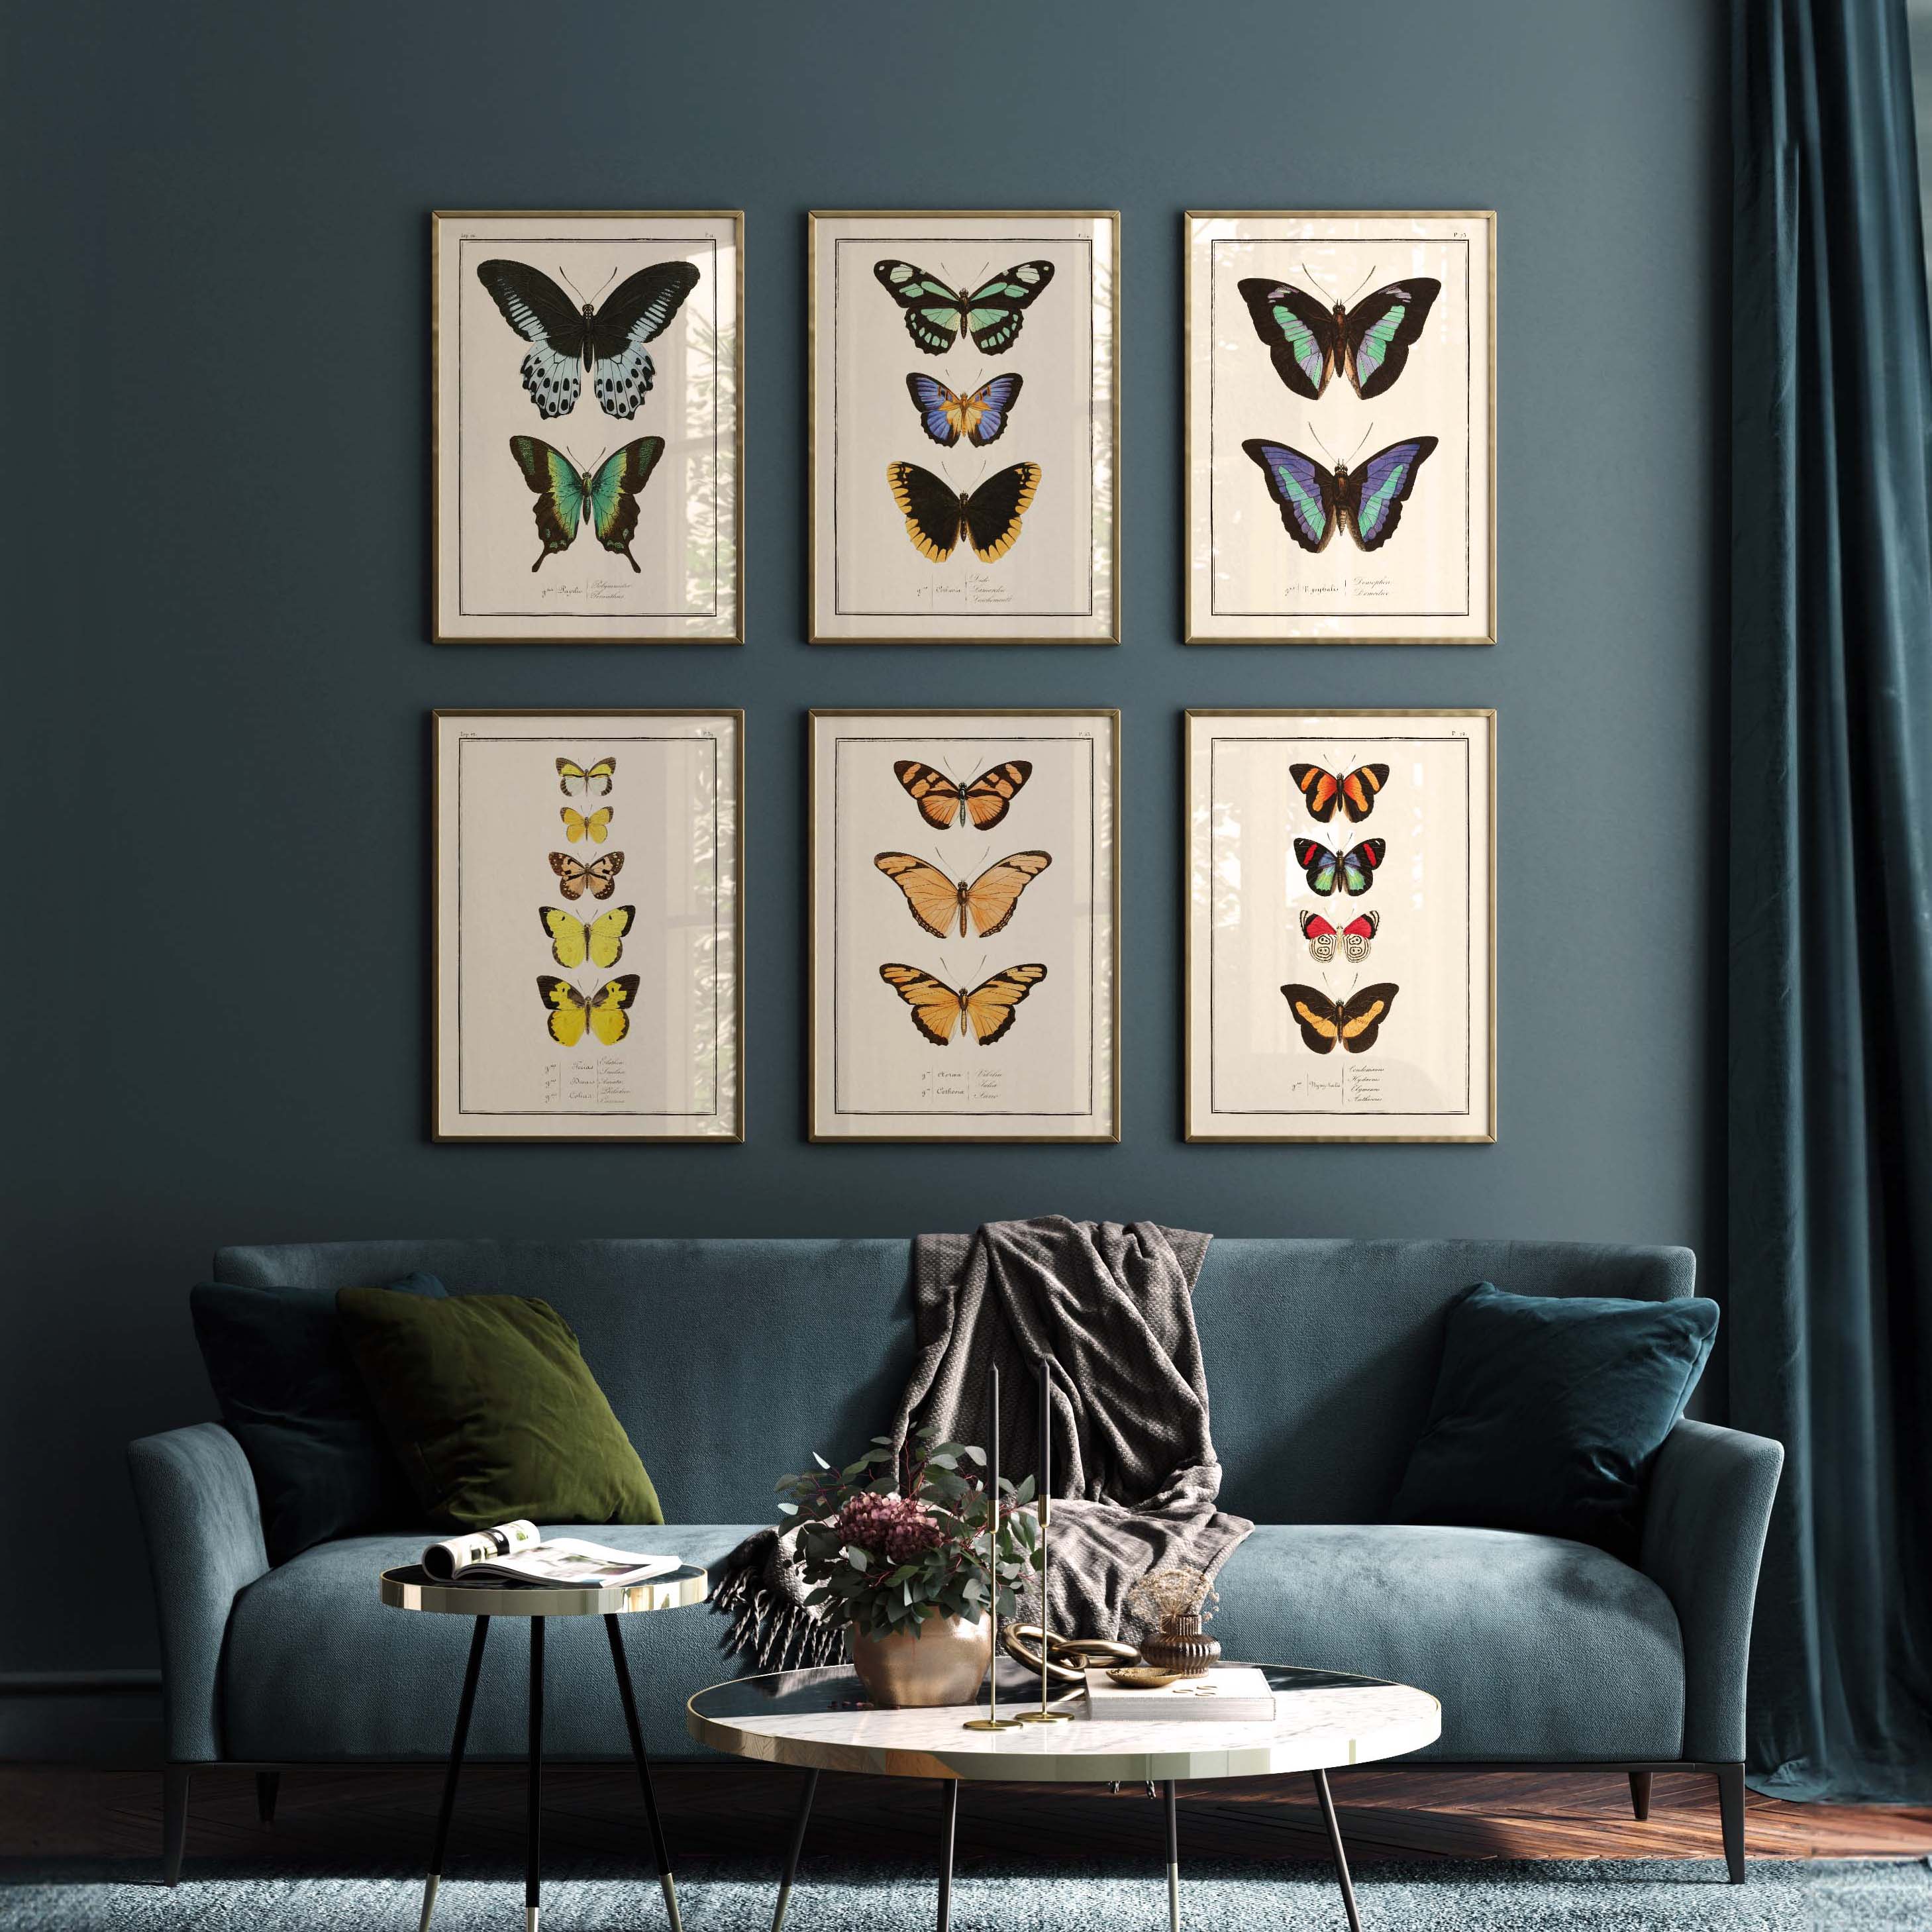 Planche d'entomologie Papillons - N°12-oneart.fr